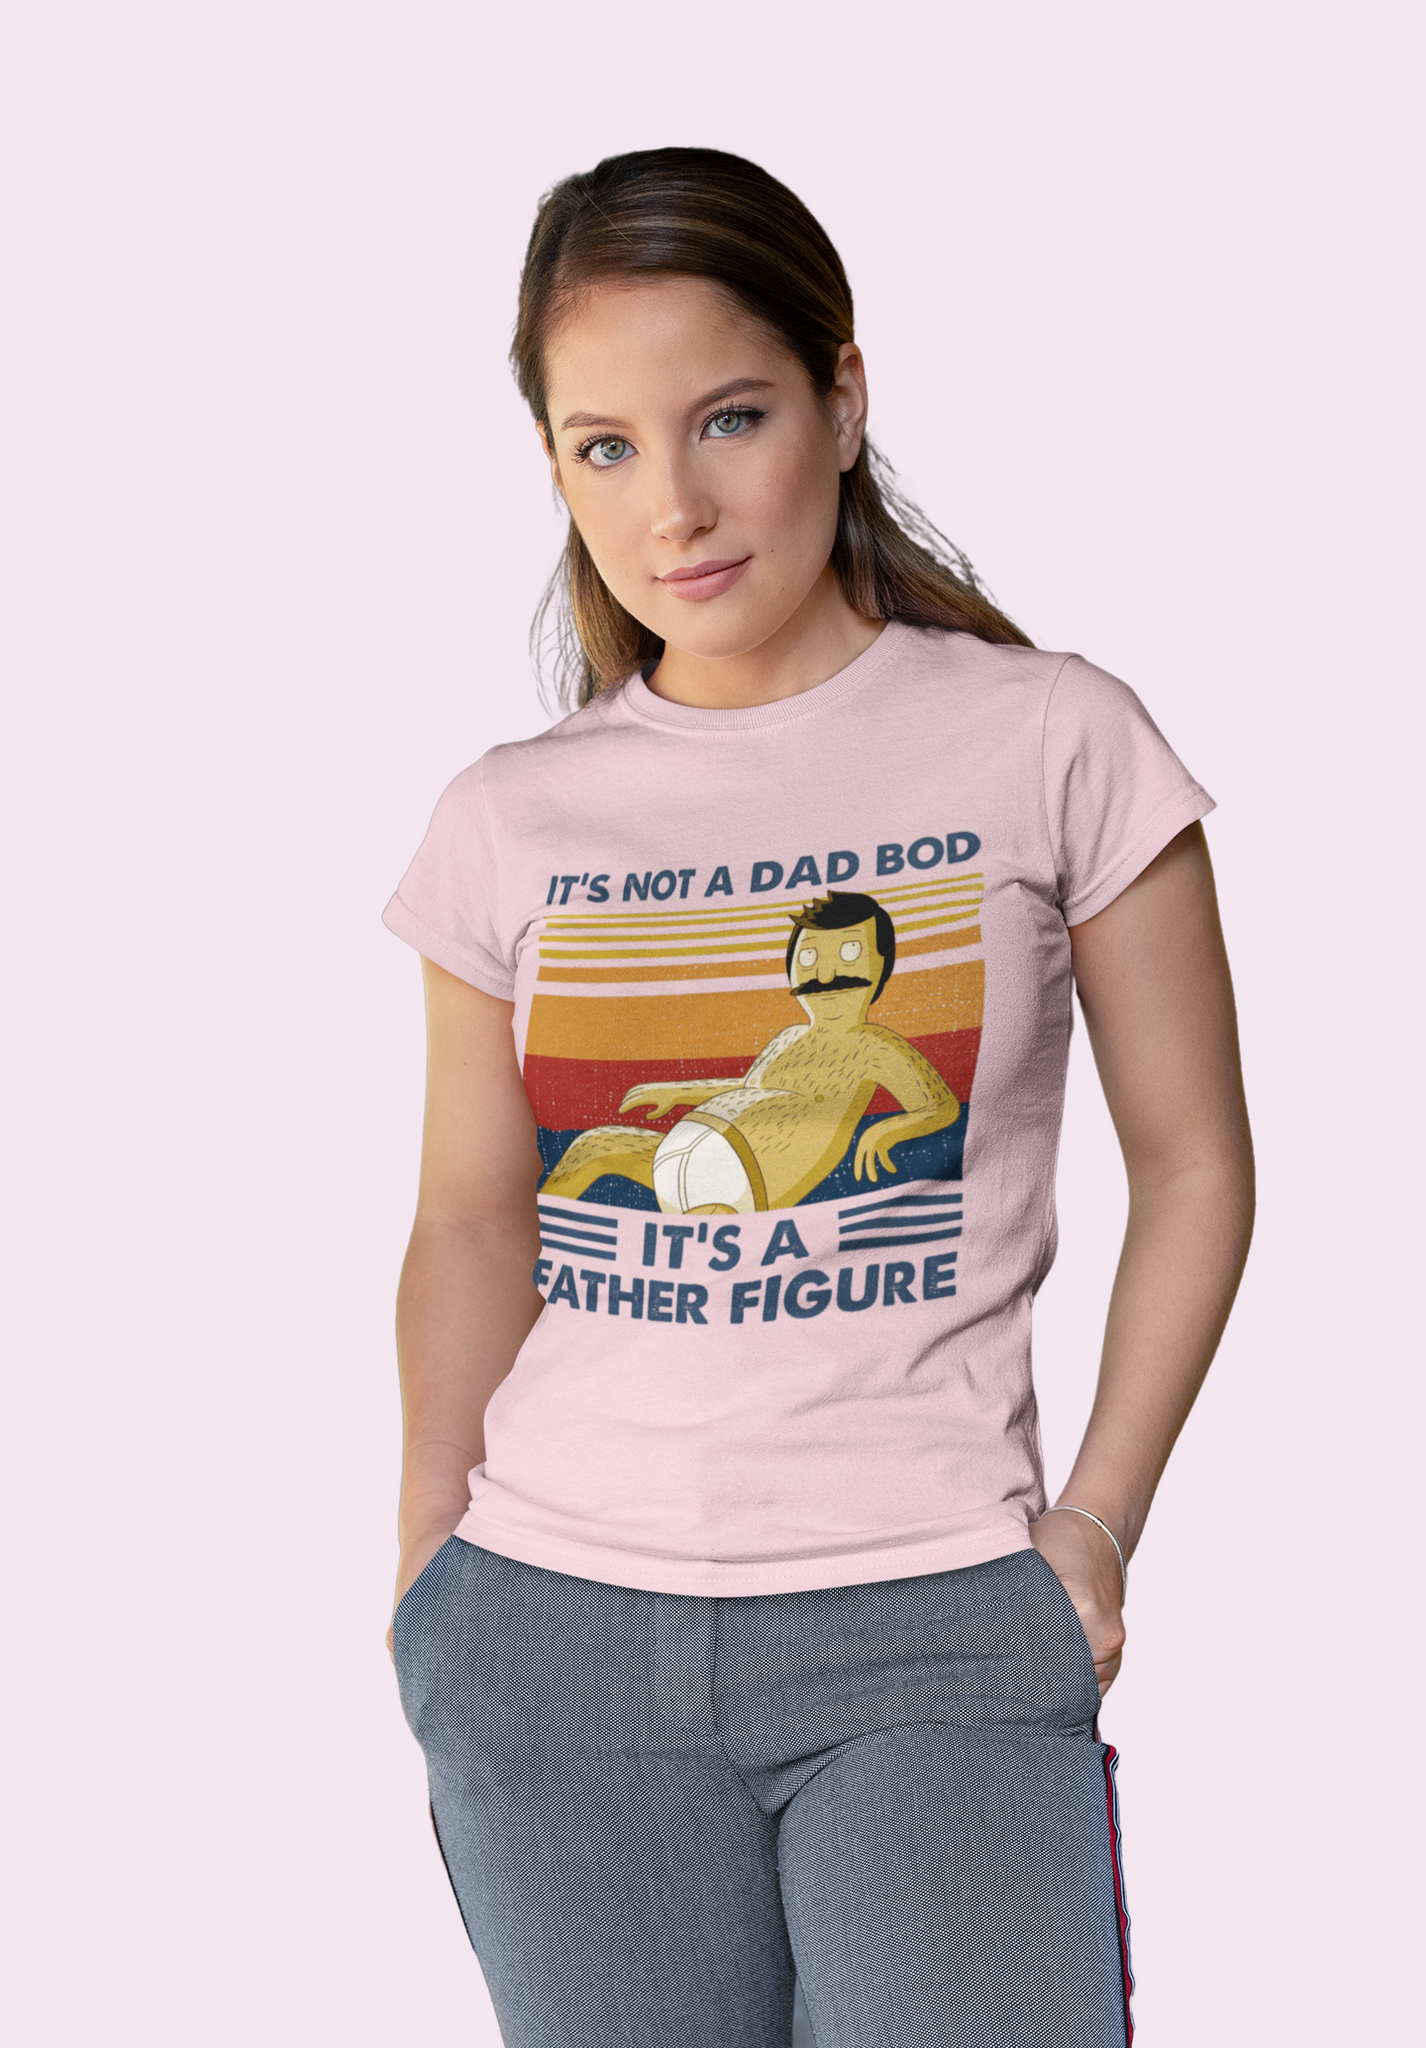 Bobs Burgers Cartoon T Shirt, Bob Belcher T Shirt, Its Not A Dad Bod Its A Father Figure Tshirt